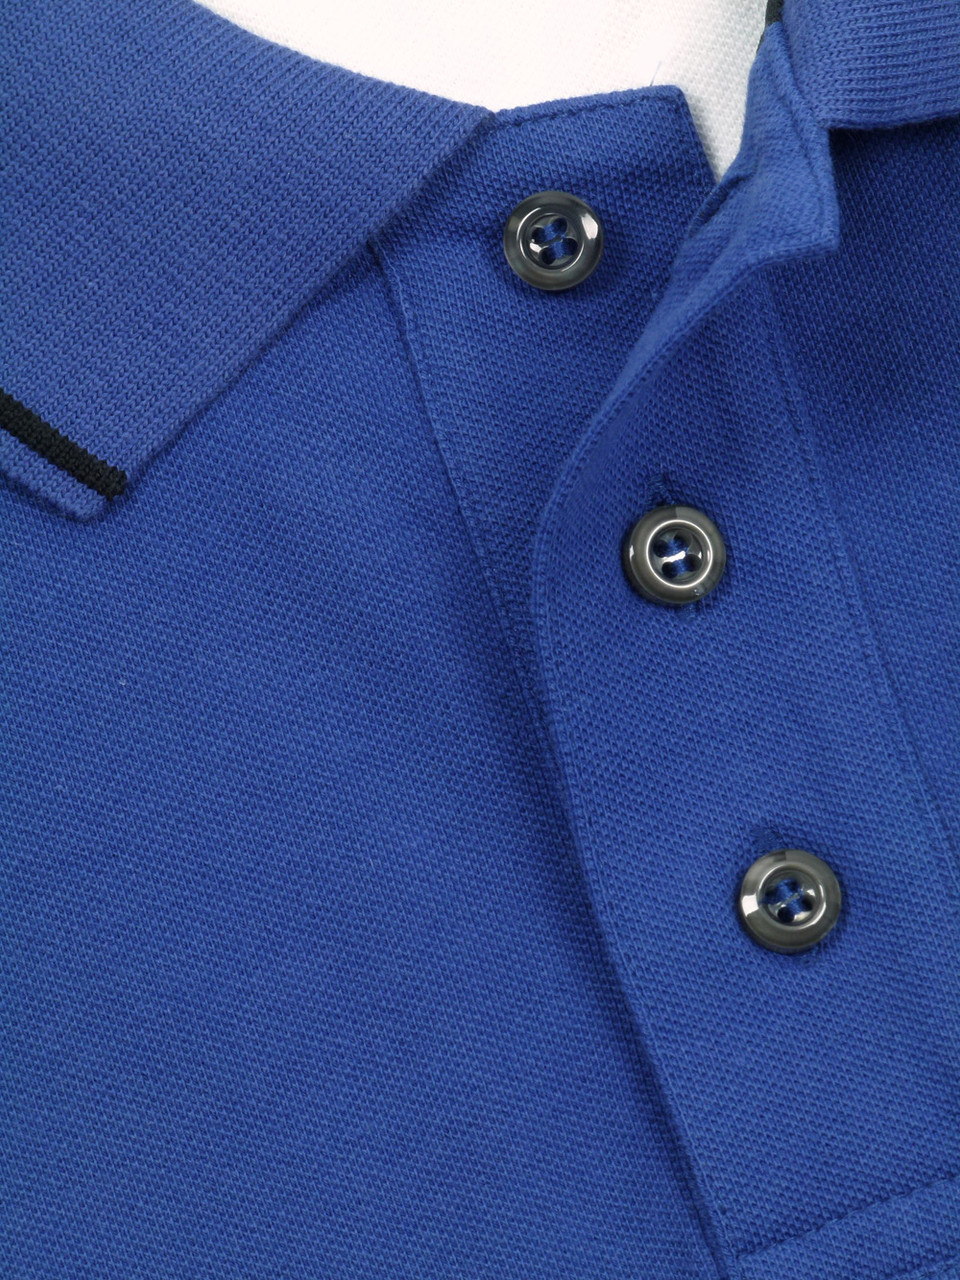 Roberto Cavalli blue polo shirt - Montenapoleone